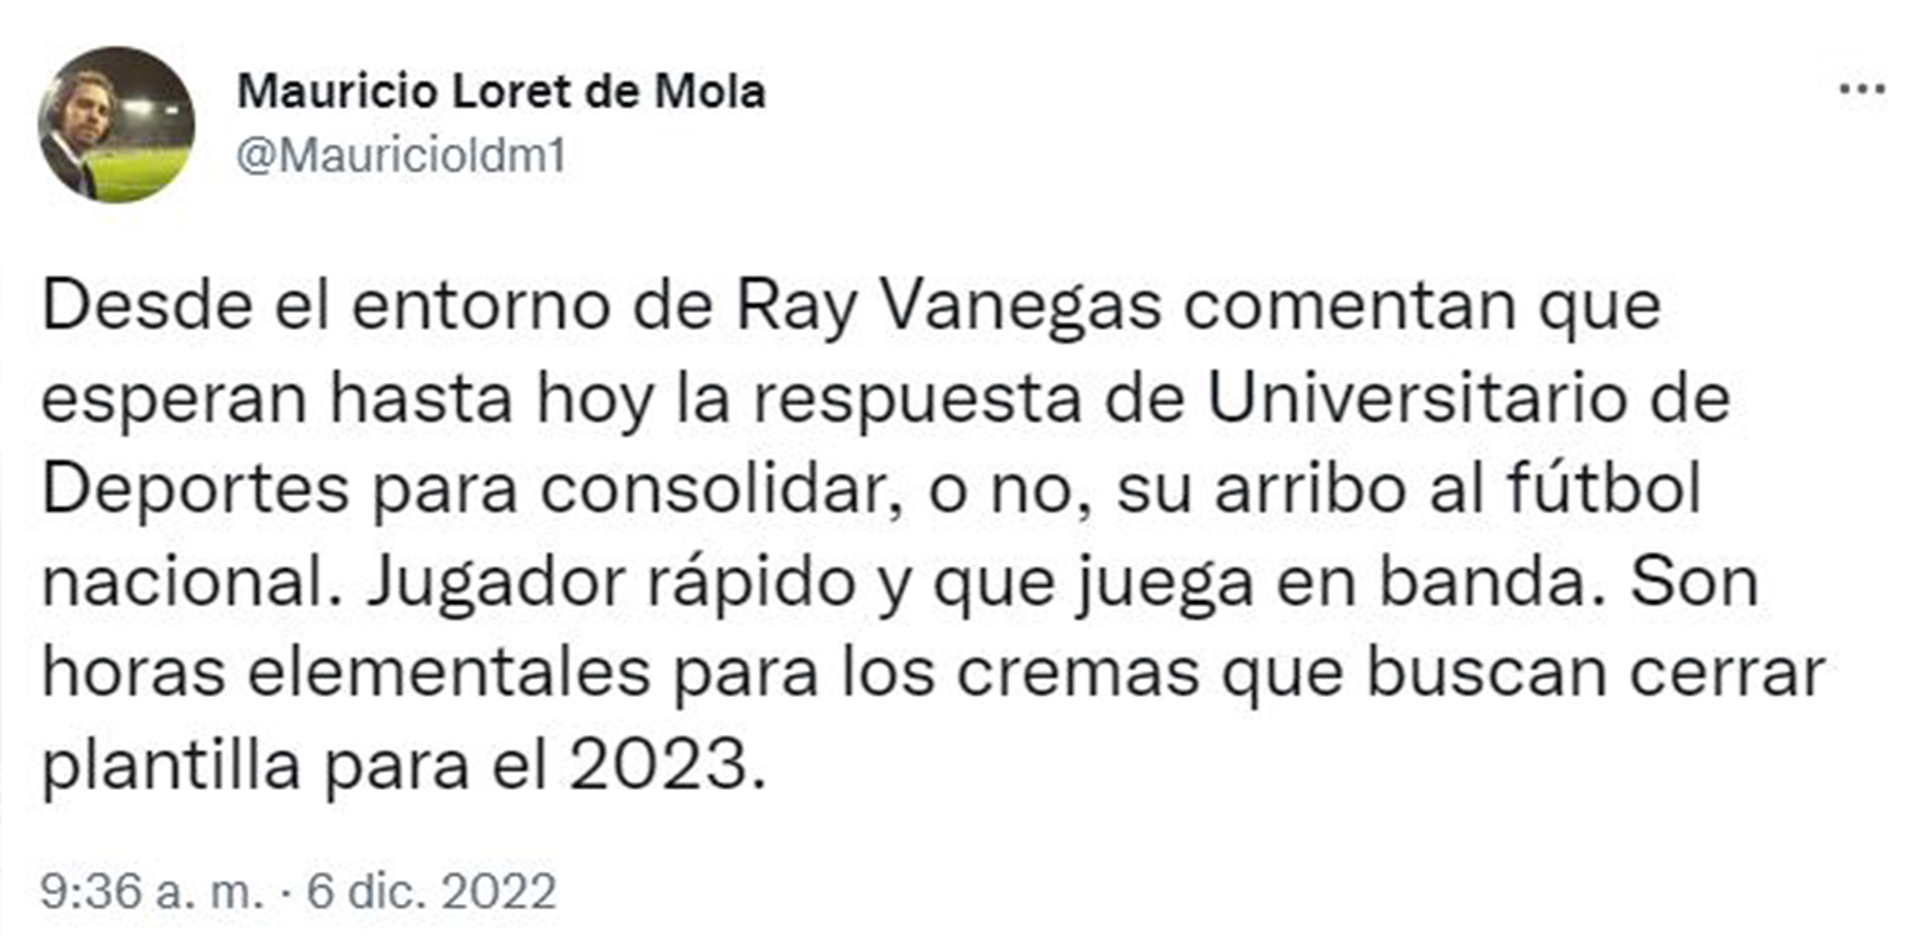 Ray Vanegas aguarda decisión de Universitario, asegura Mauricio Loret de Mola. (Twitter)